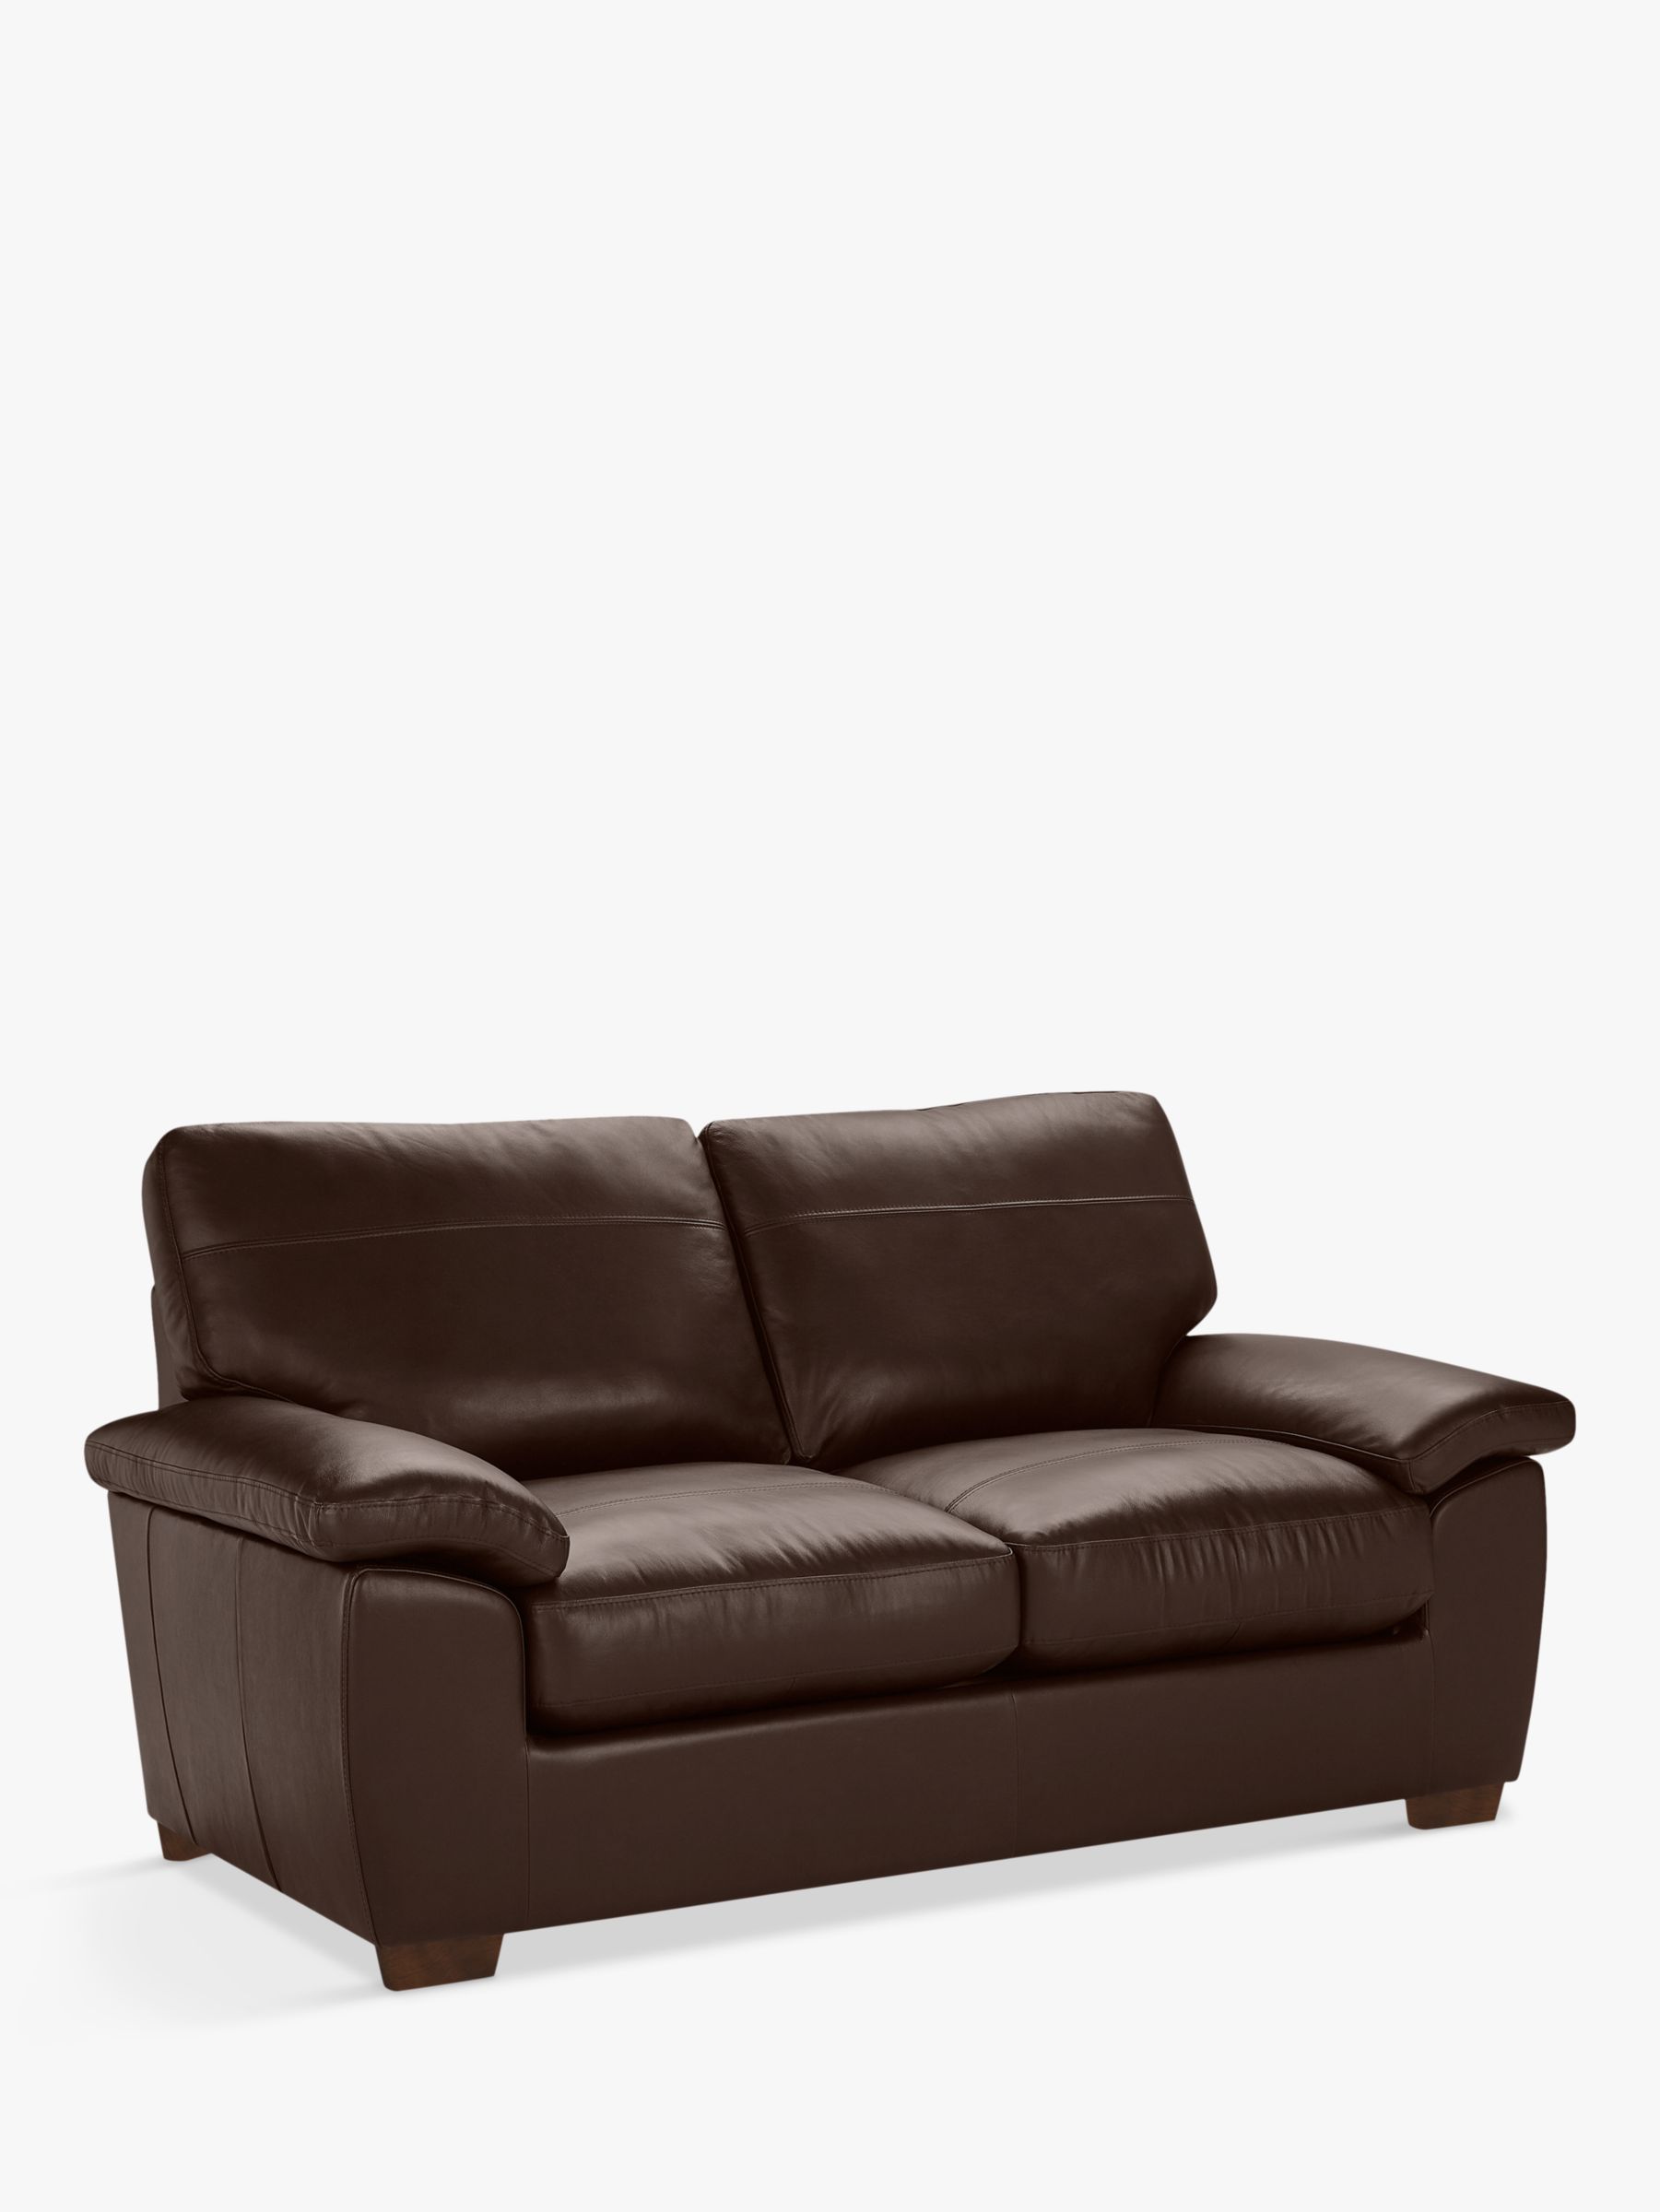 Photo of John lewis camden medium 2 seater leather sofa dark leg